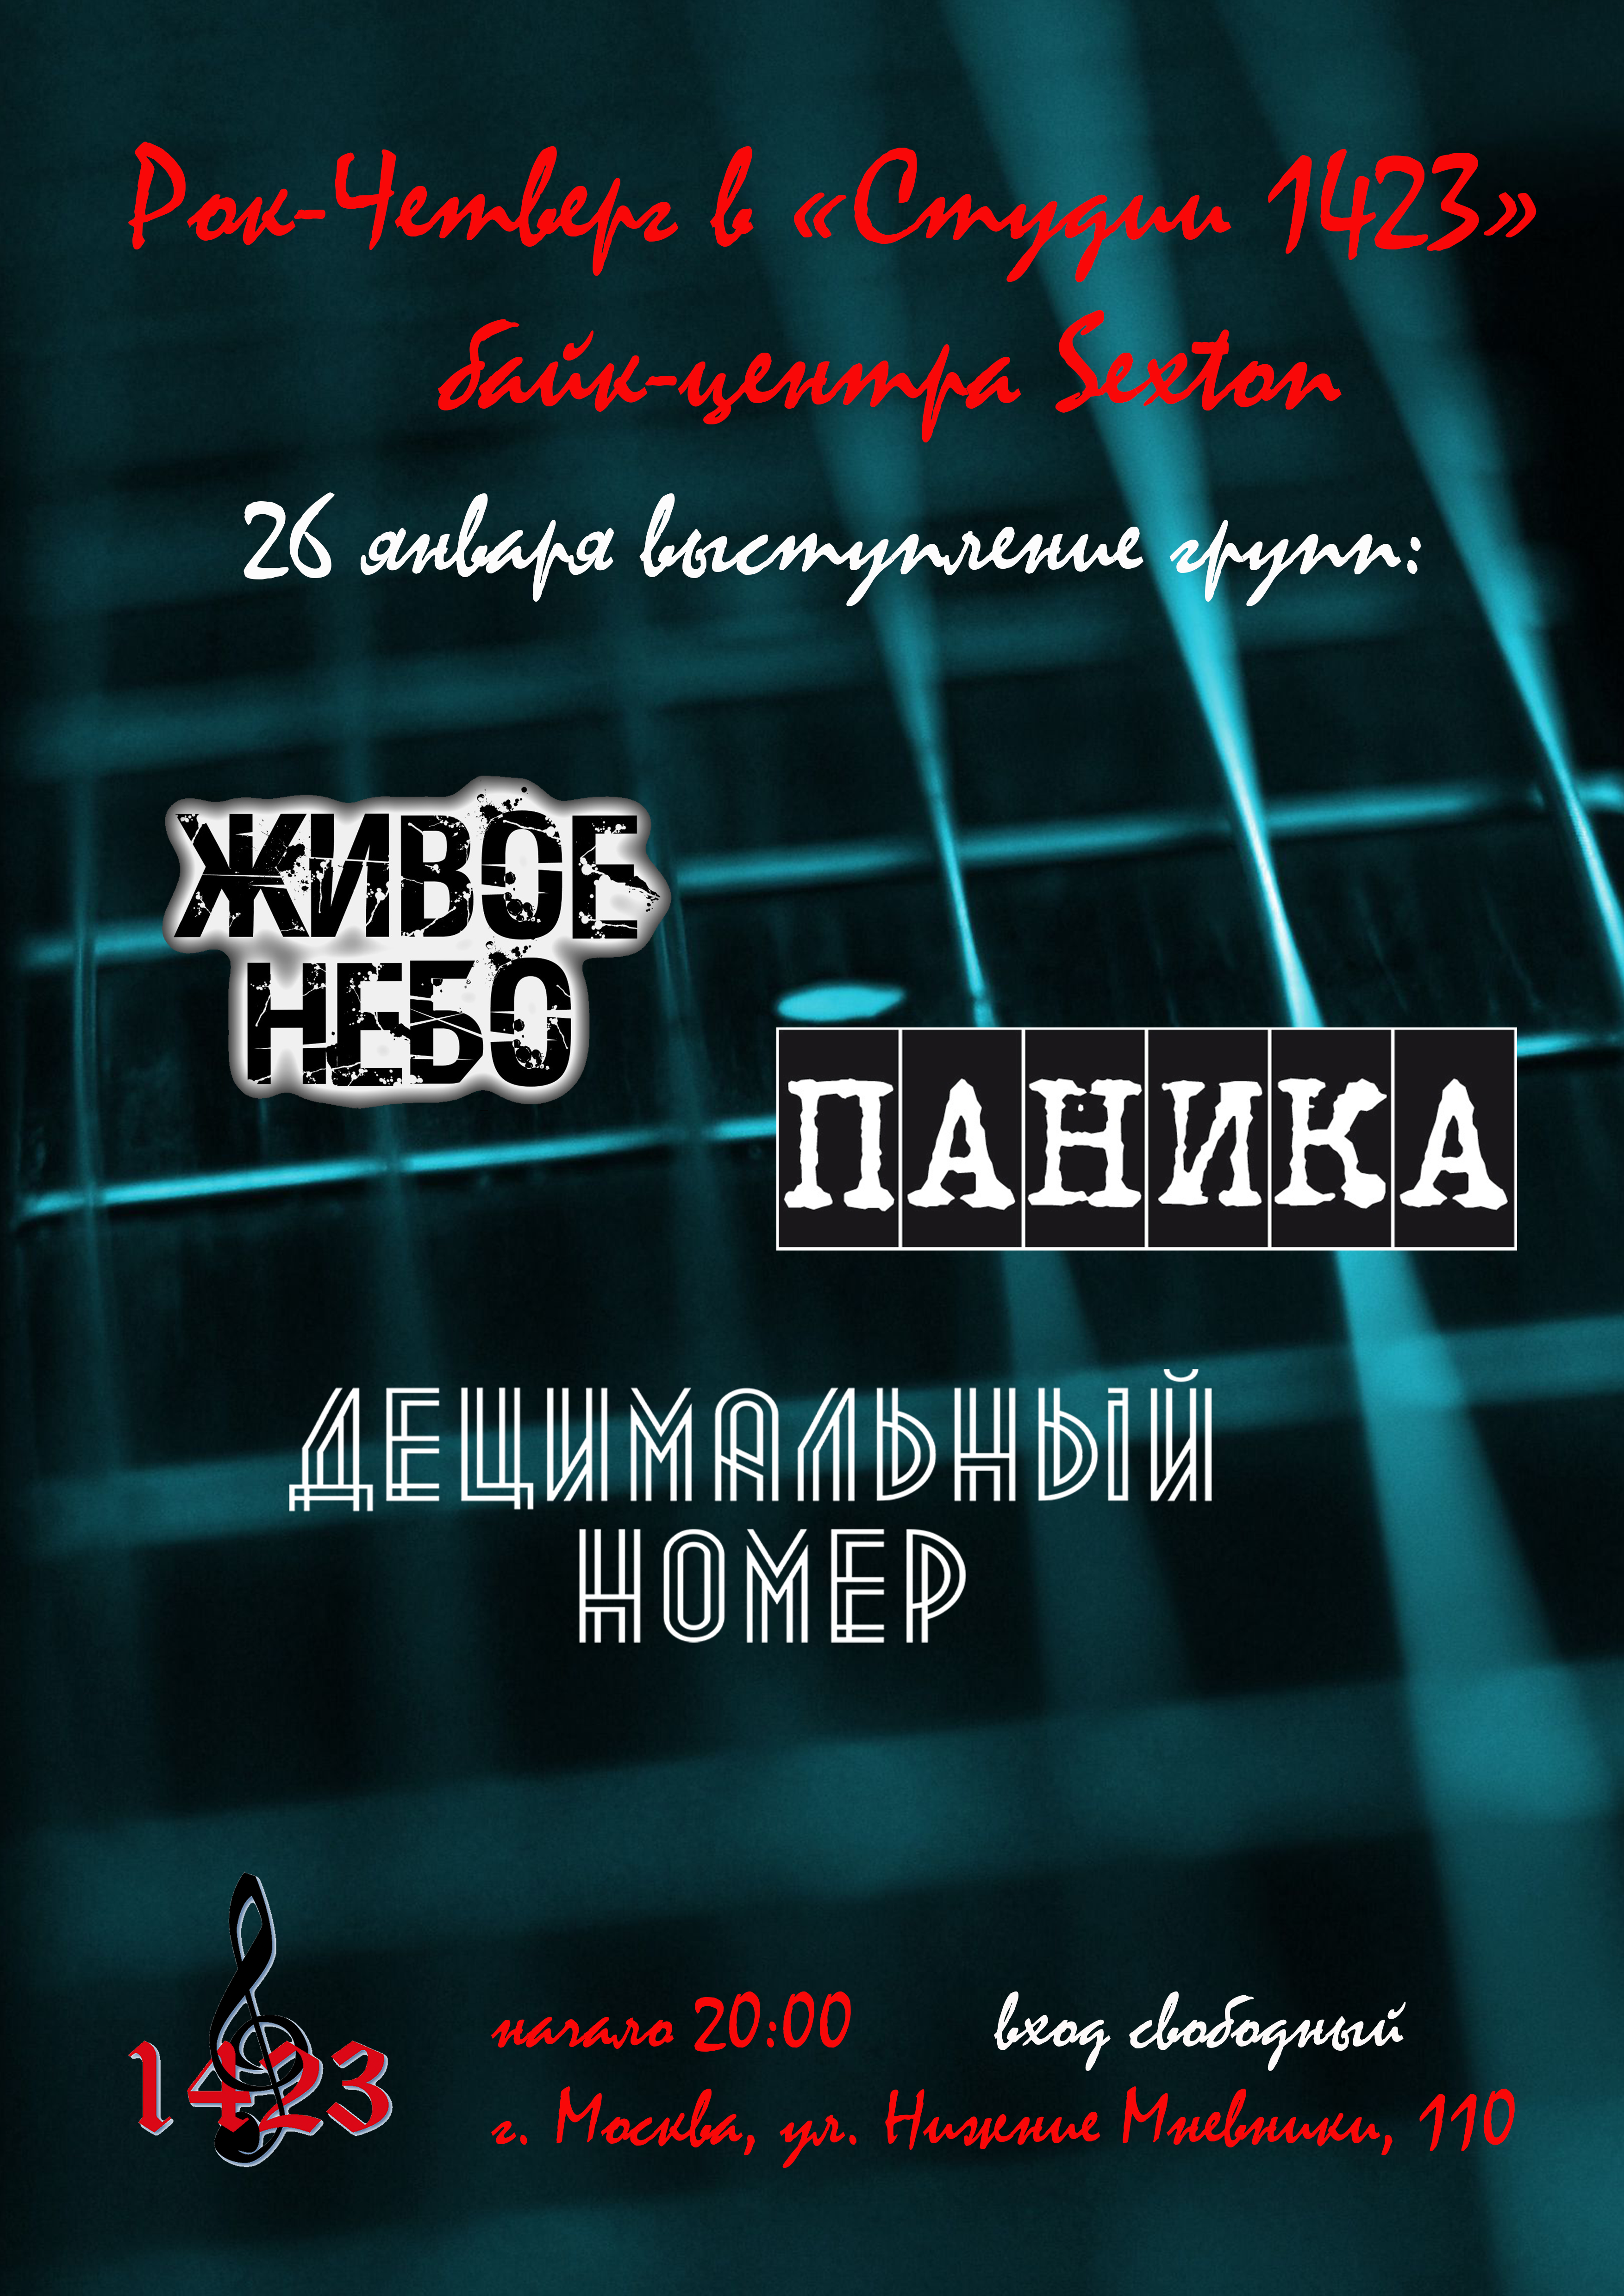 Рок-четверг в 26 января 2023, концерт в Sexton / Студия 1423, Москва